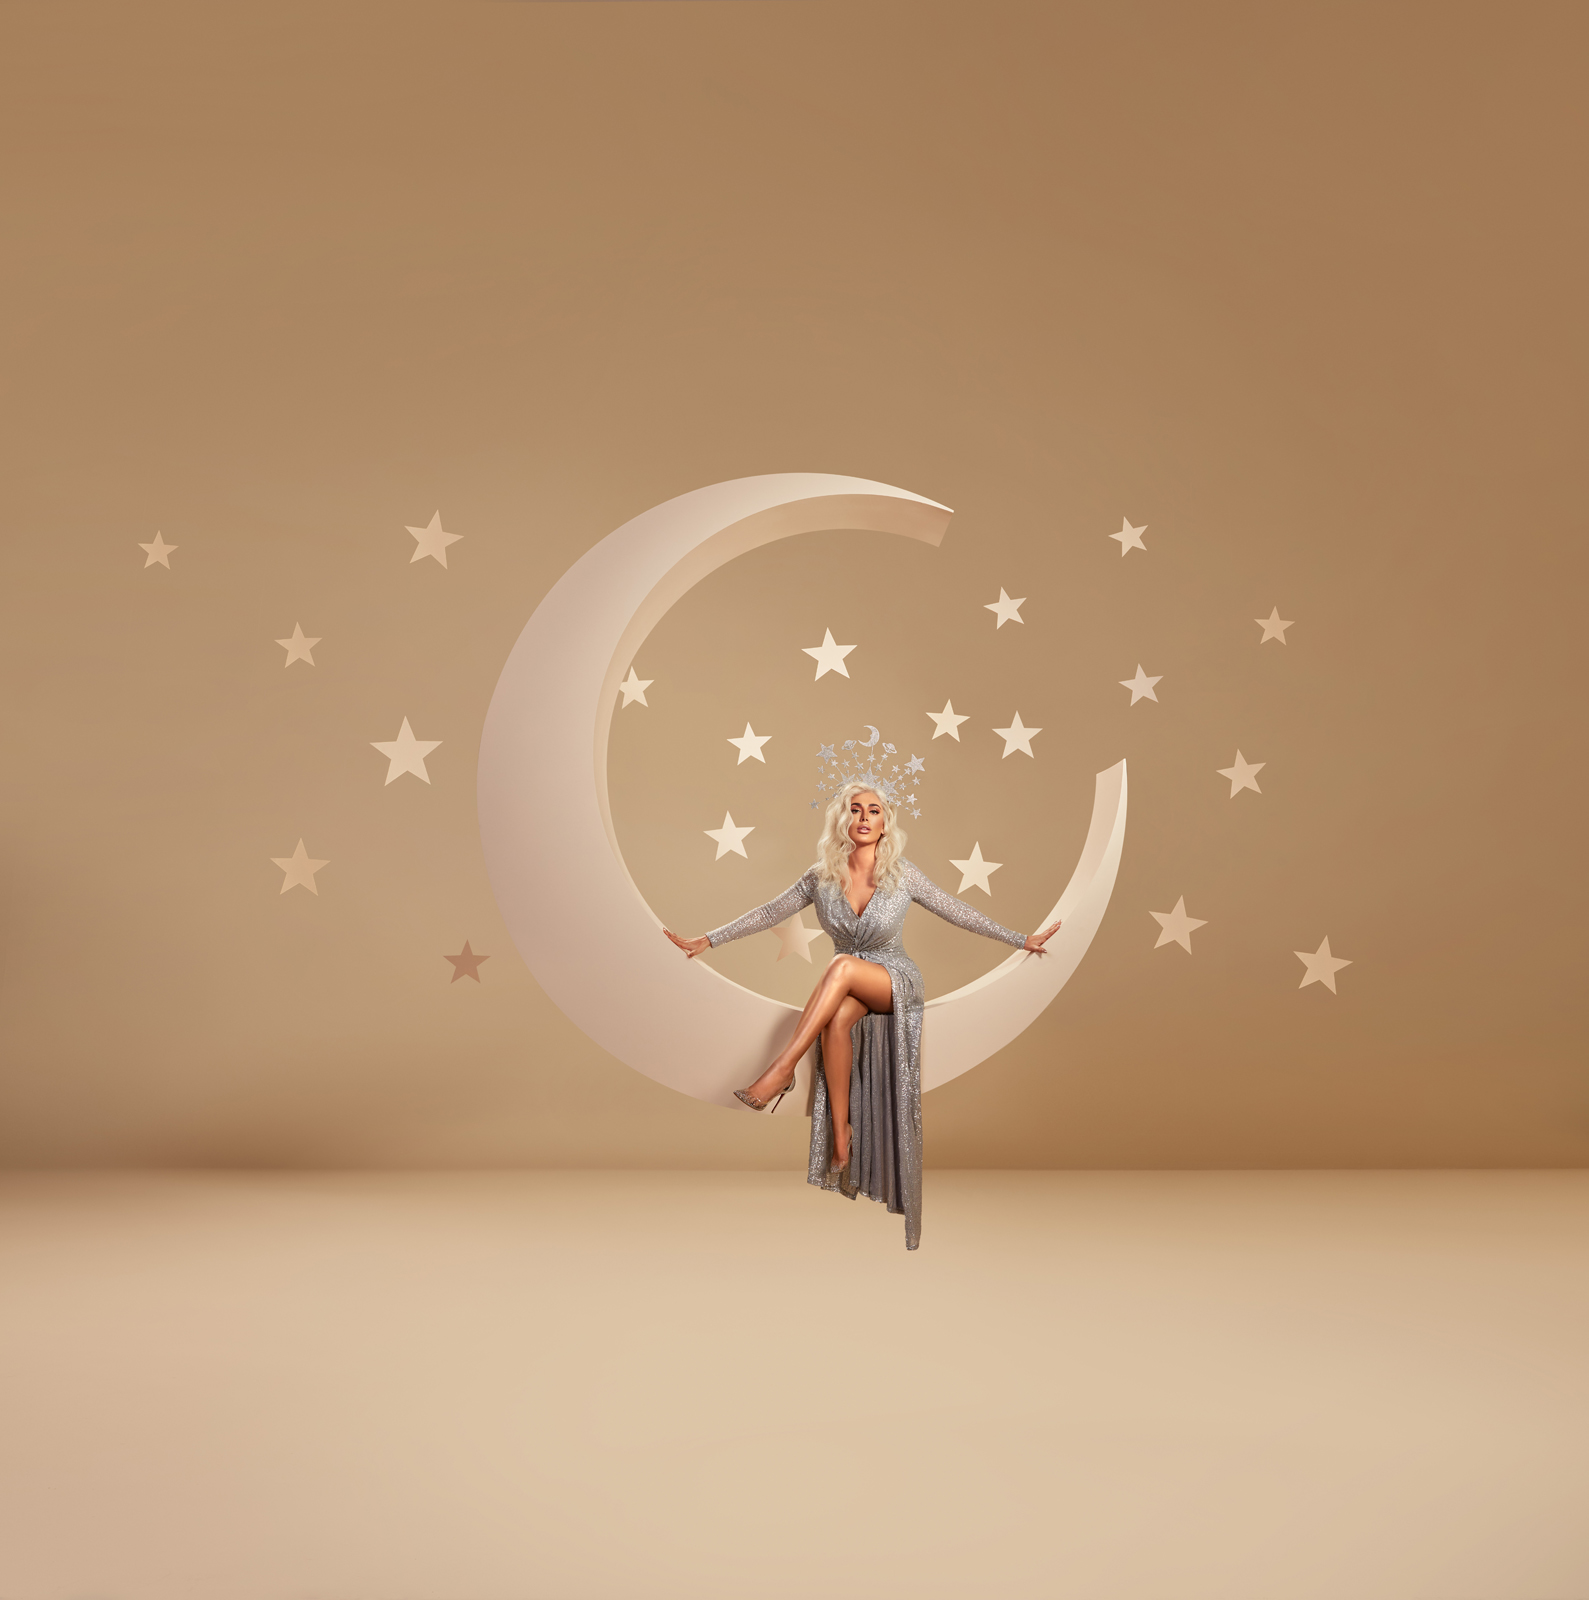 Huda Beauty by Eli Rezkallah, produced by Plastik Studios 2019 (5).jpg